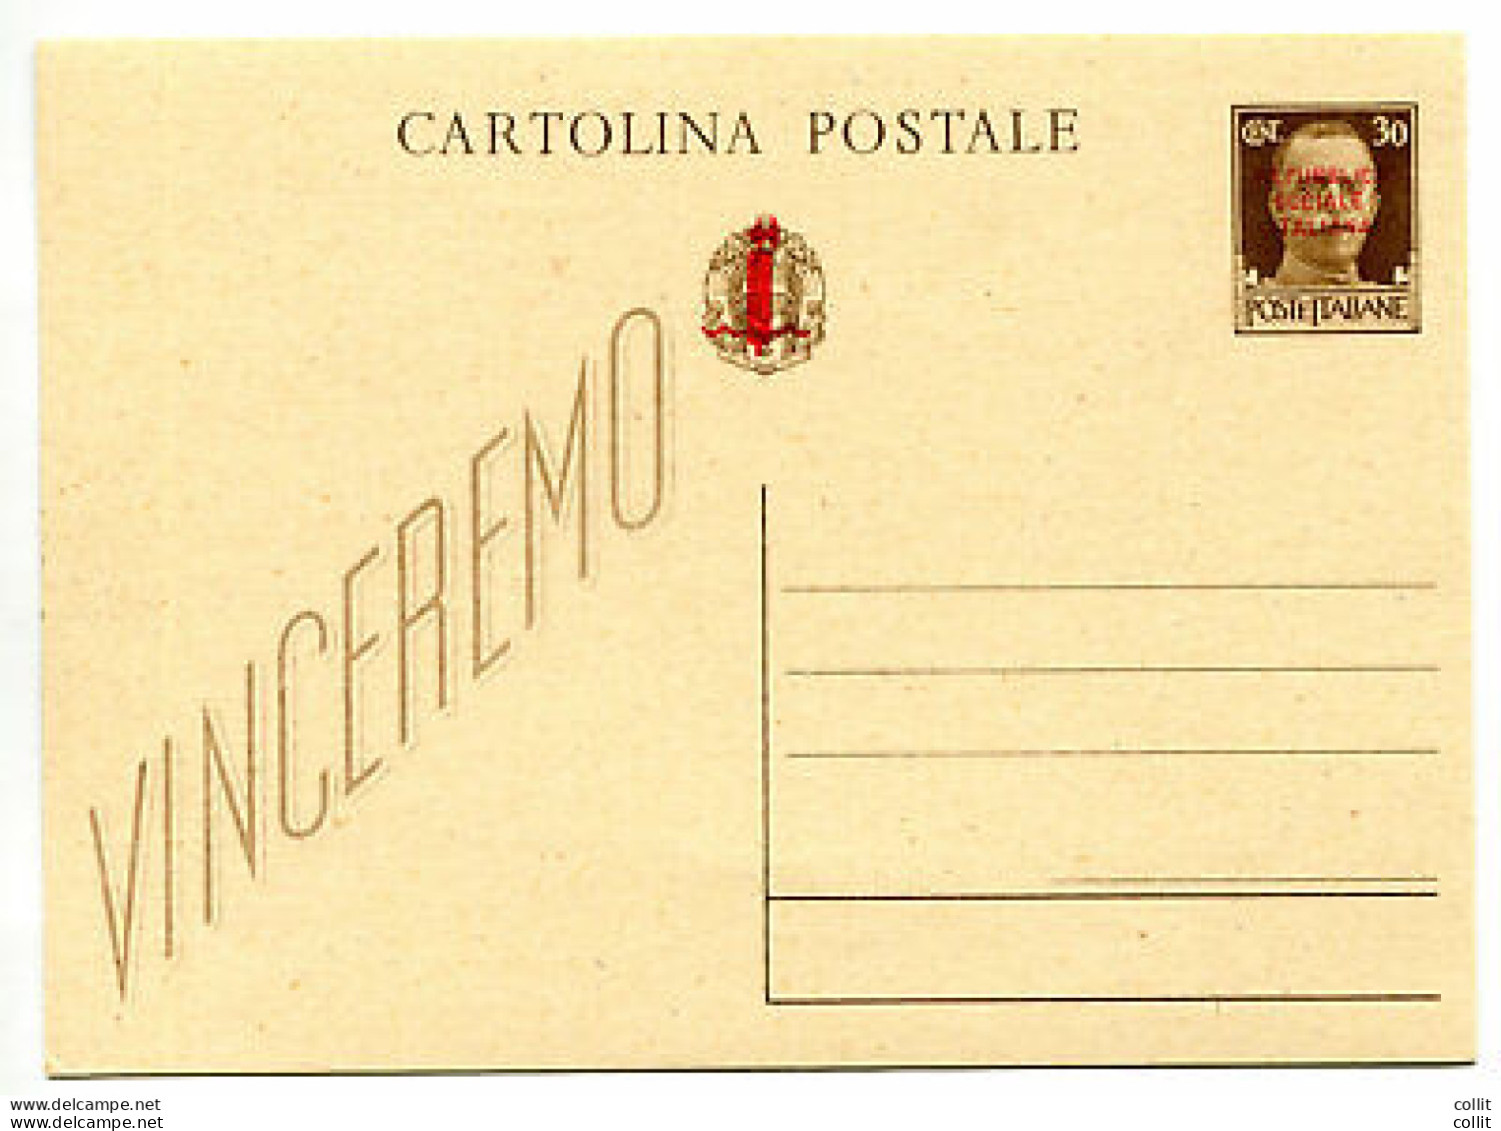 Cartolina Postale Repubblica Sociale Cent. 30 - Nuevos